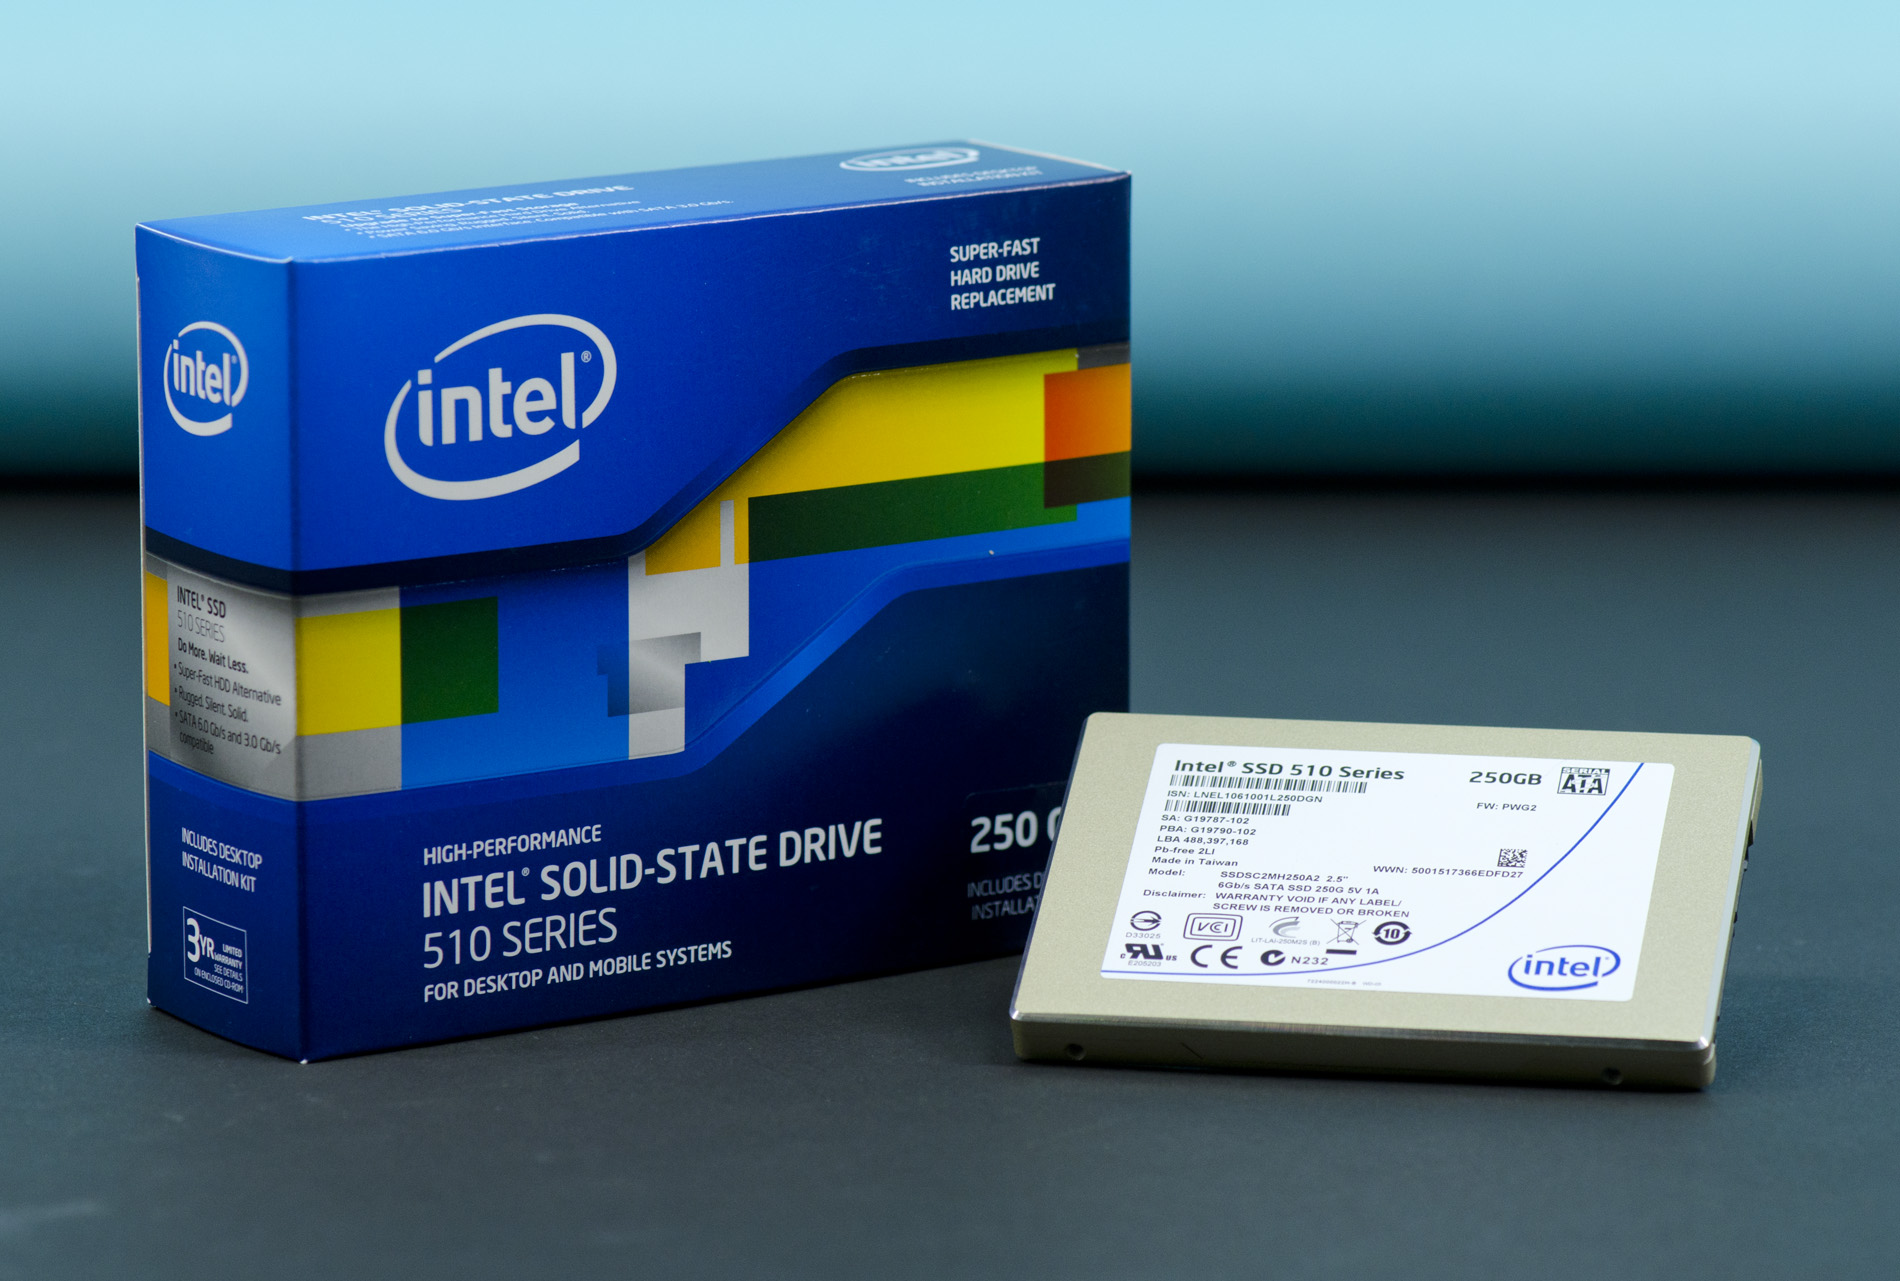 The Intel 510